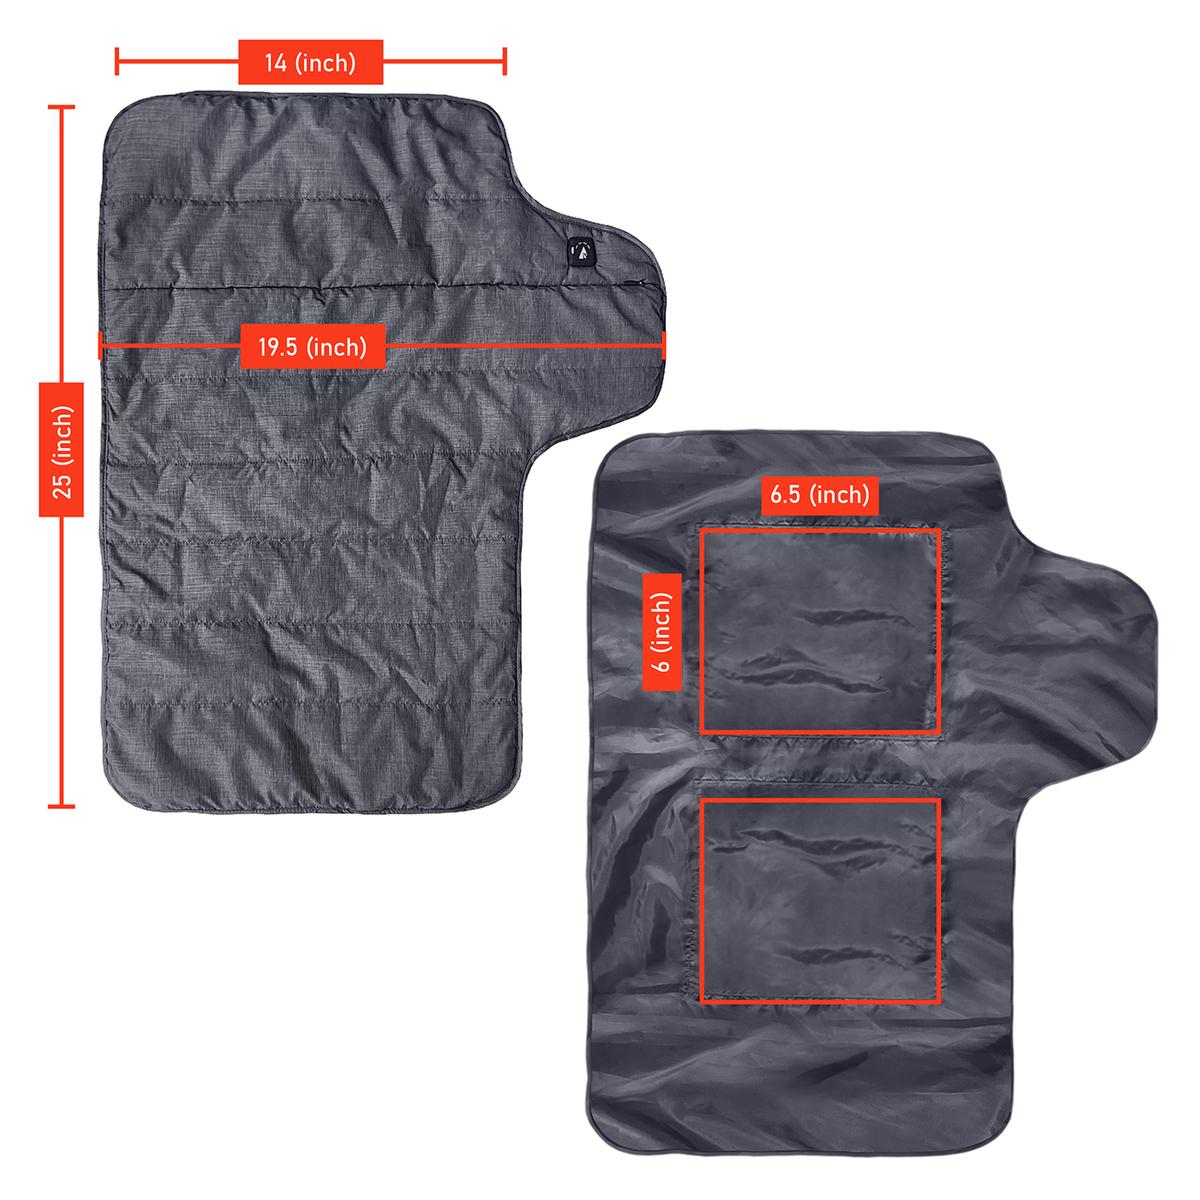 ActionHeat 7V Heated Sleeping Bag Pad - Back